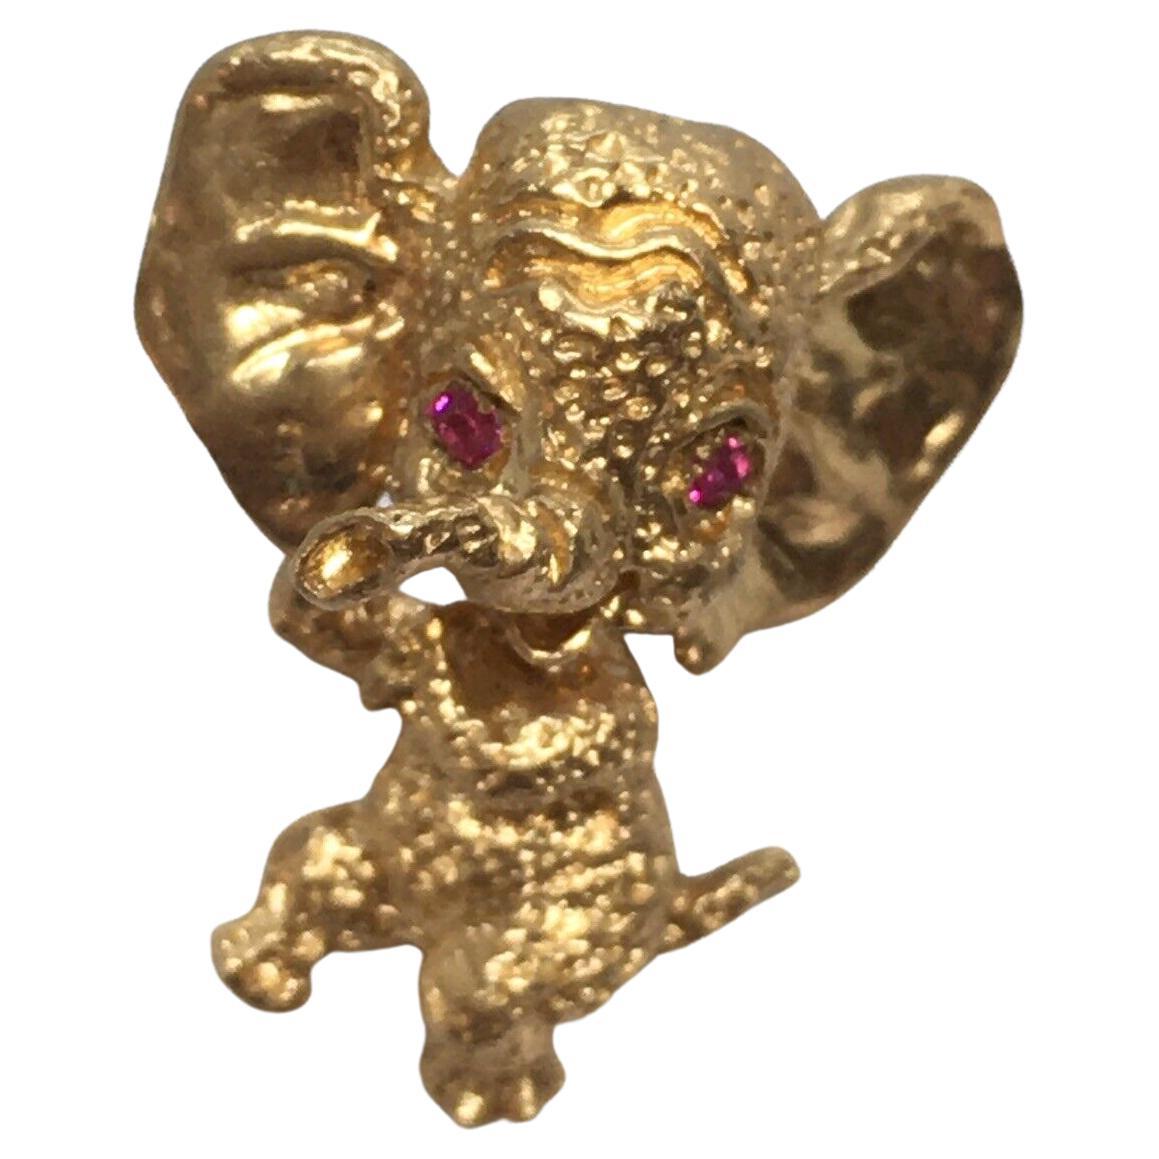 Dumbo Vintage Elephant Tie Tag Ruby Hallmark 14K Gold Copyright Possibly Disney For Sale